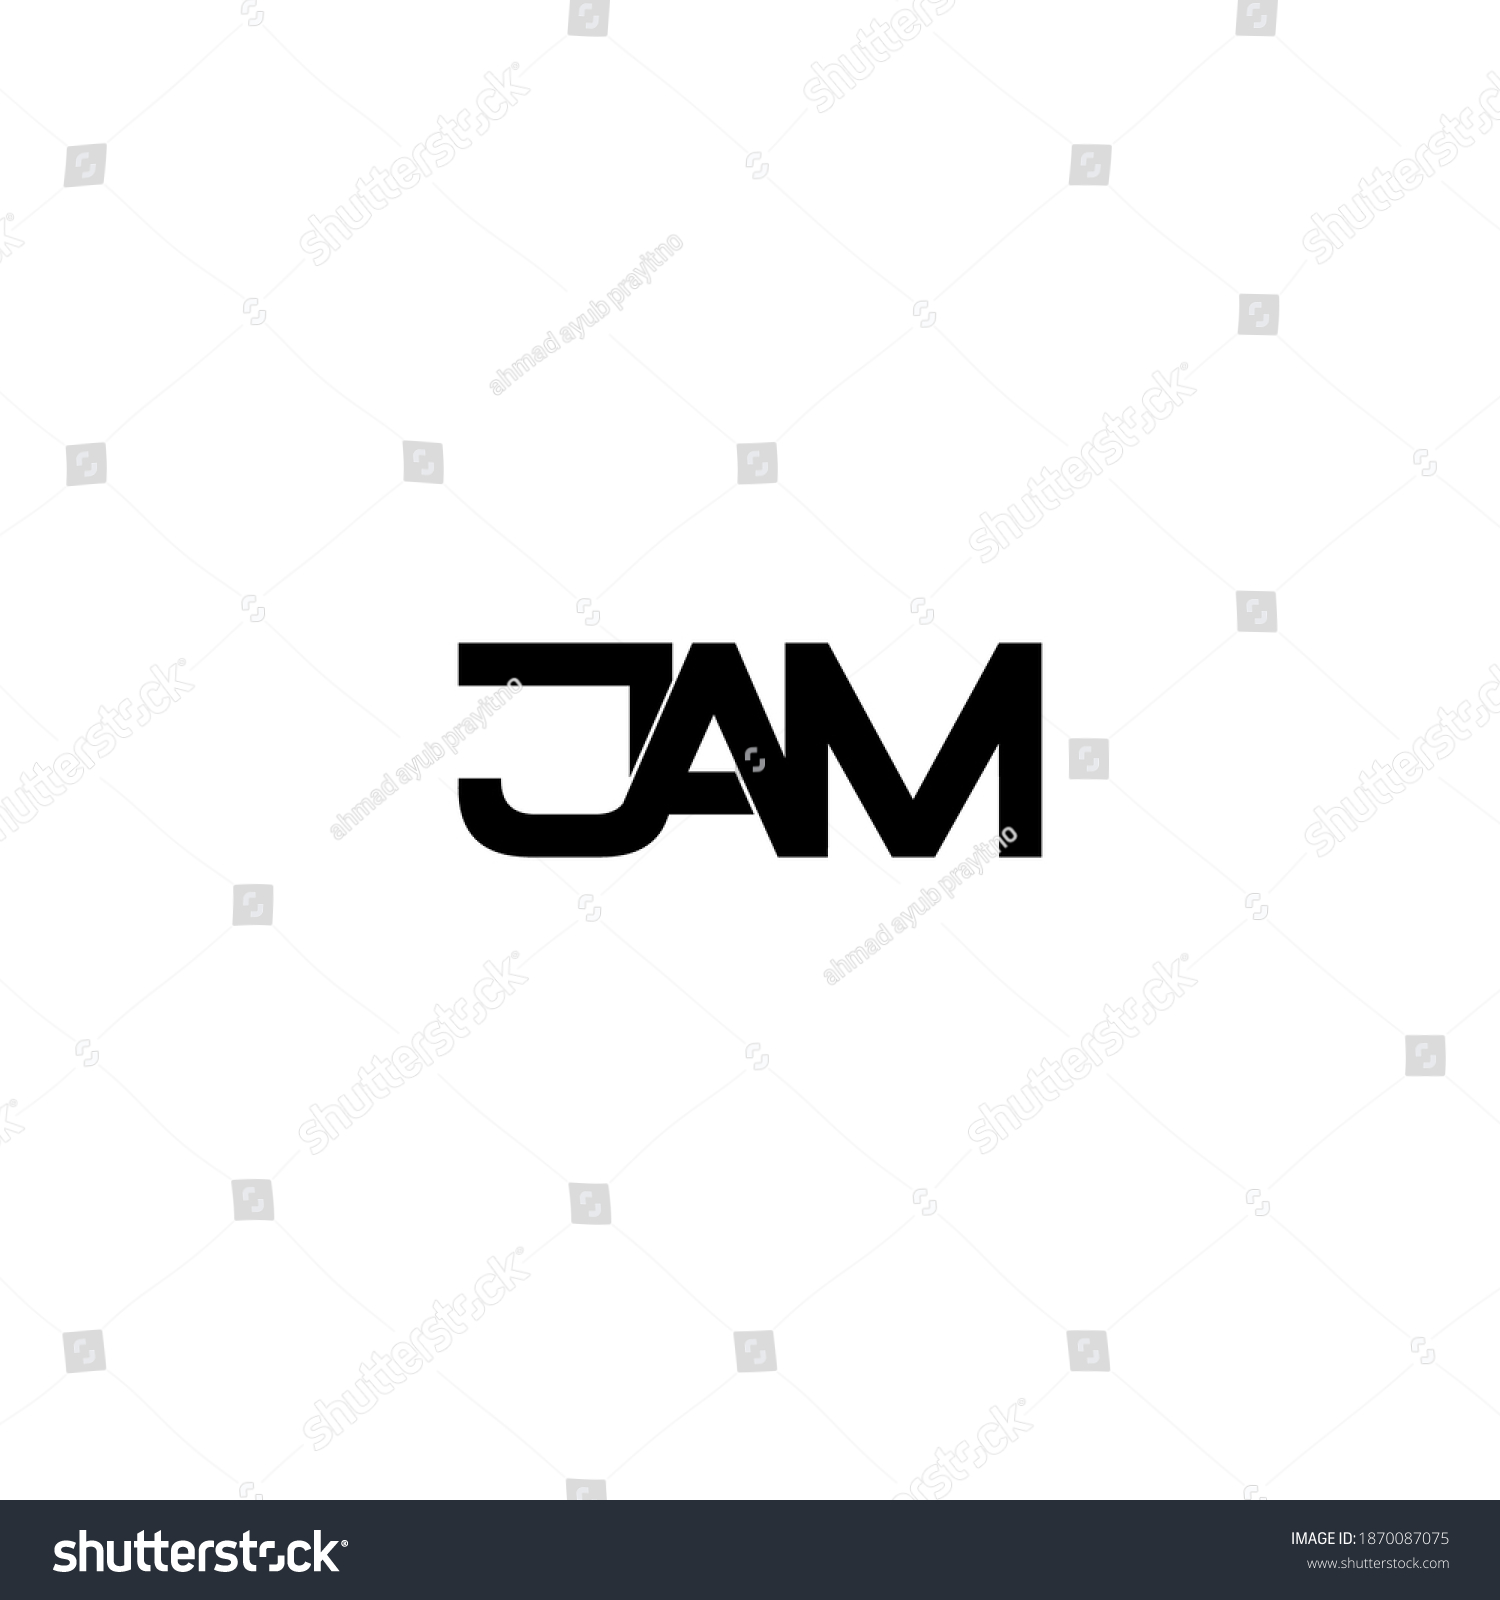 jam letter original monogram logo design #1870087075